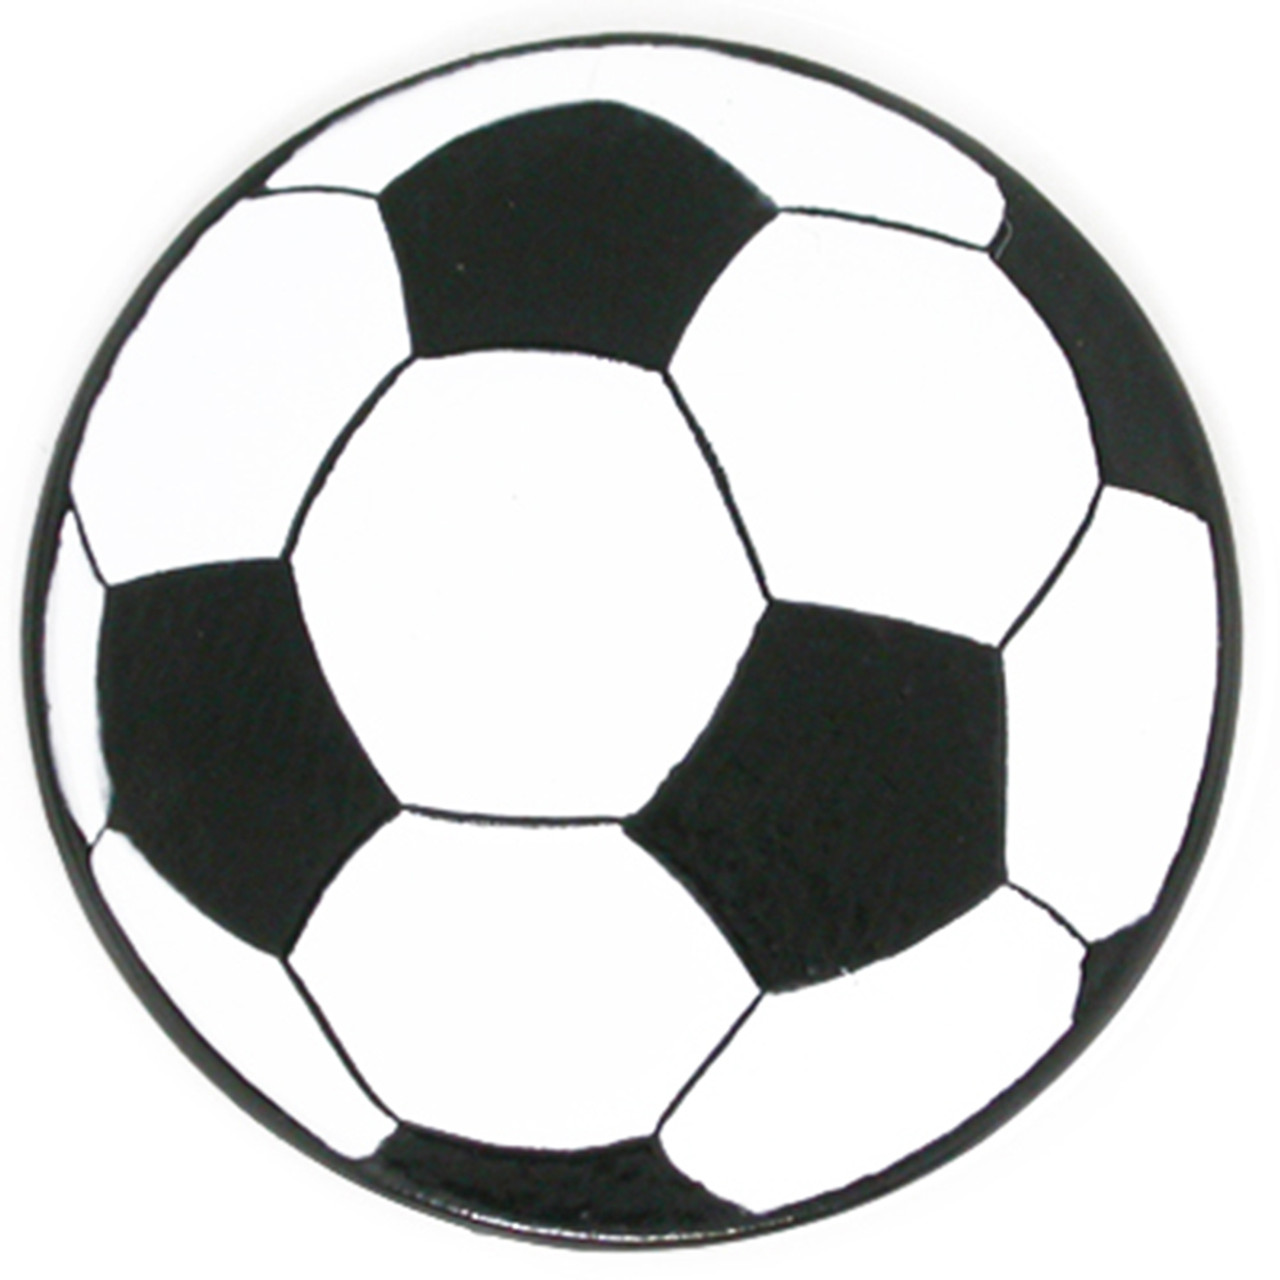 Pin on Soccer team